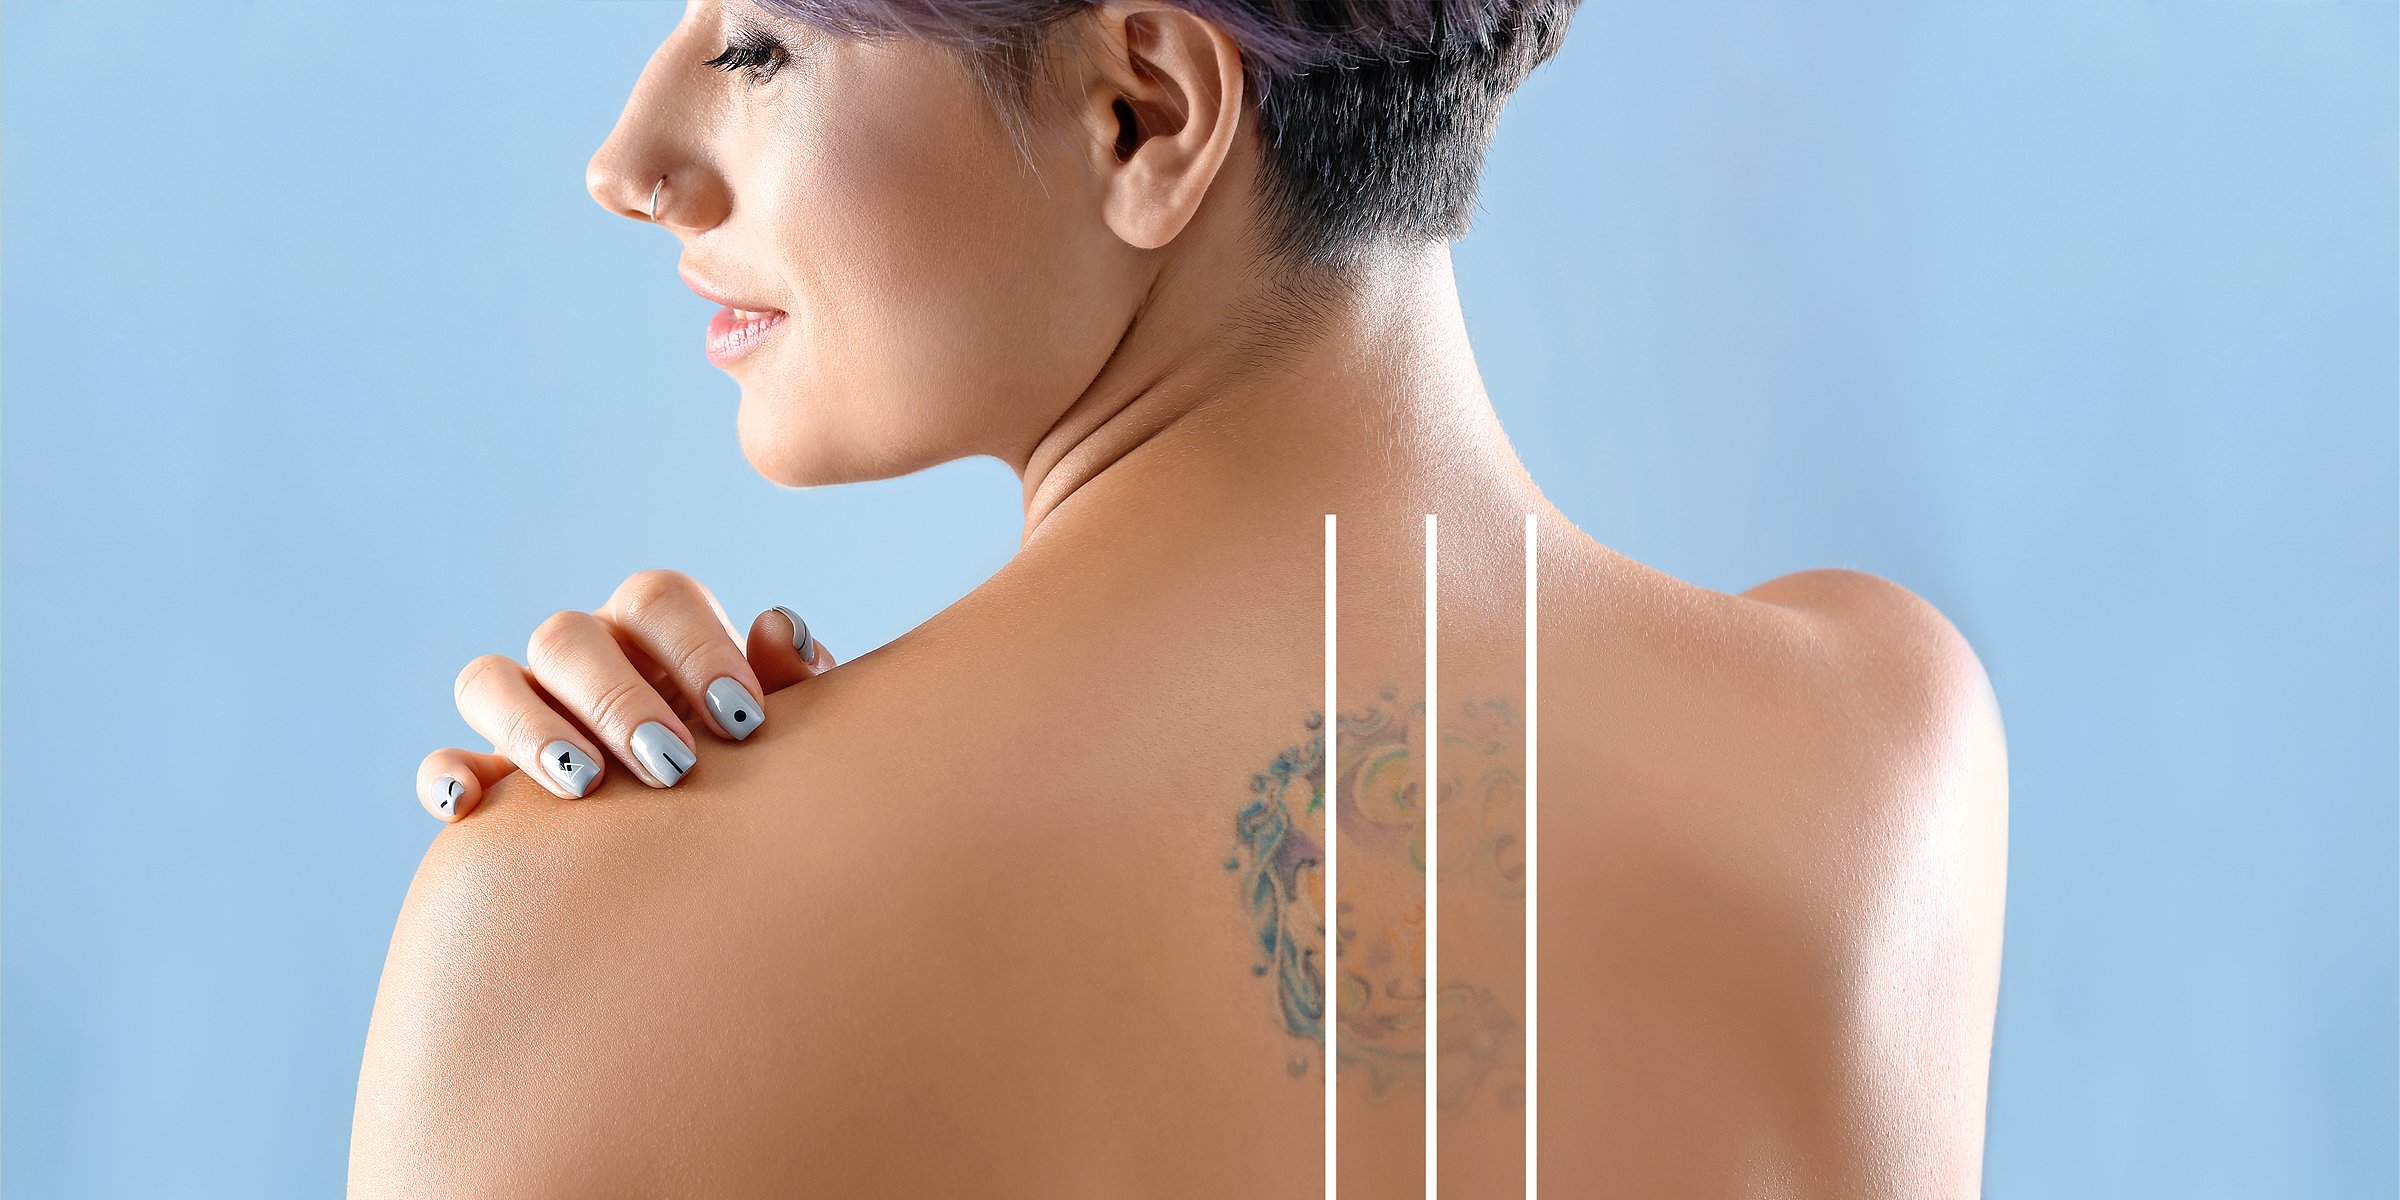 Tattoo removal. | Source:  Shutterstock.com